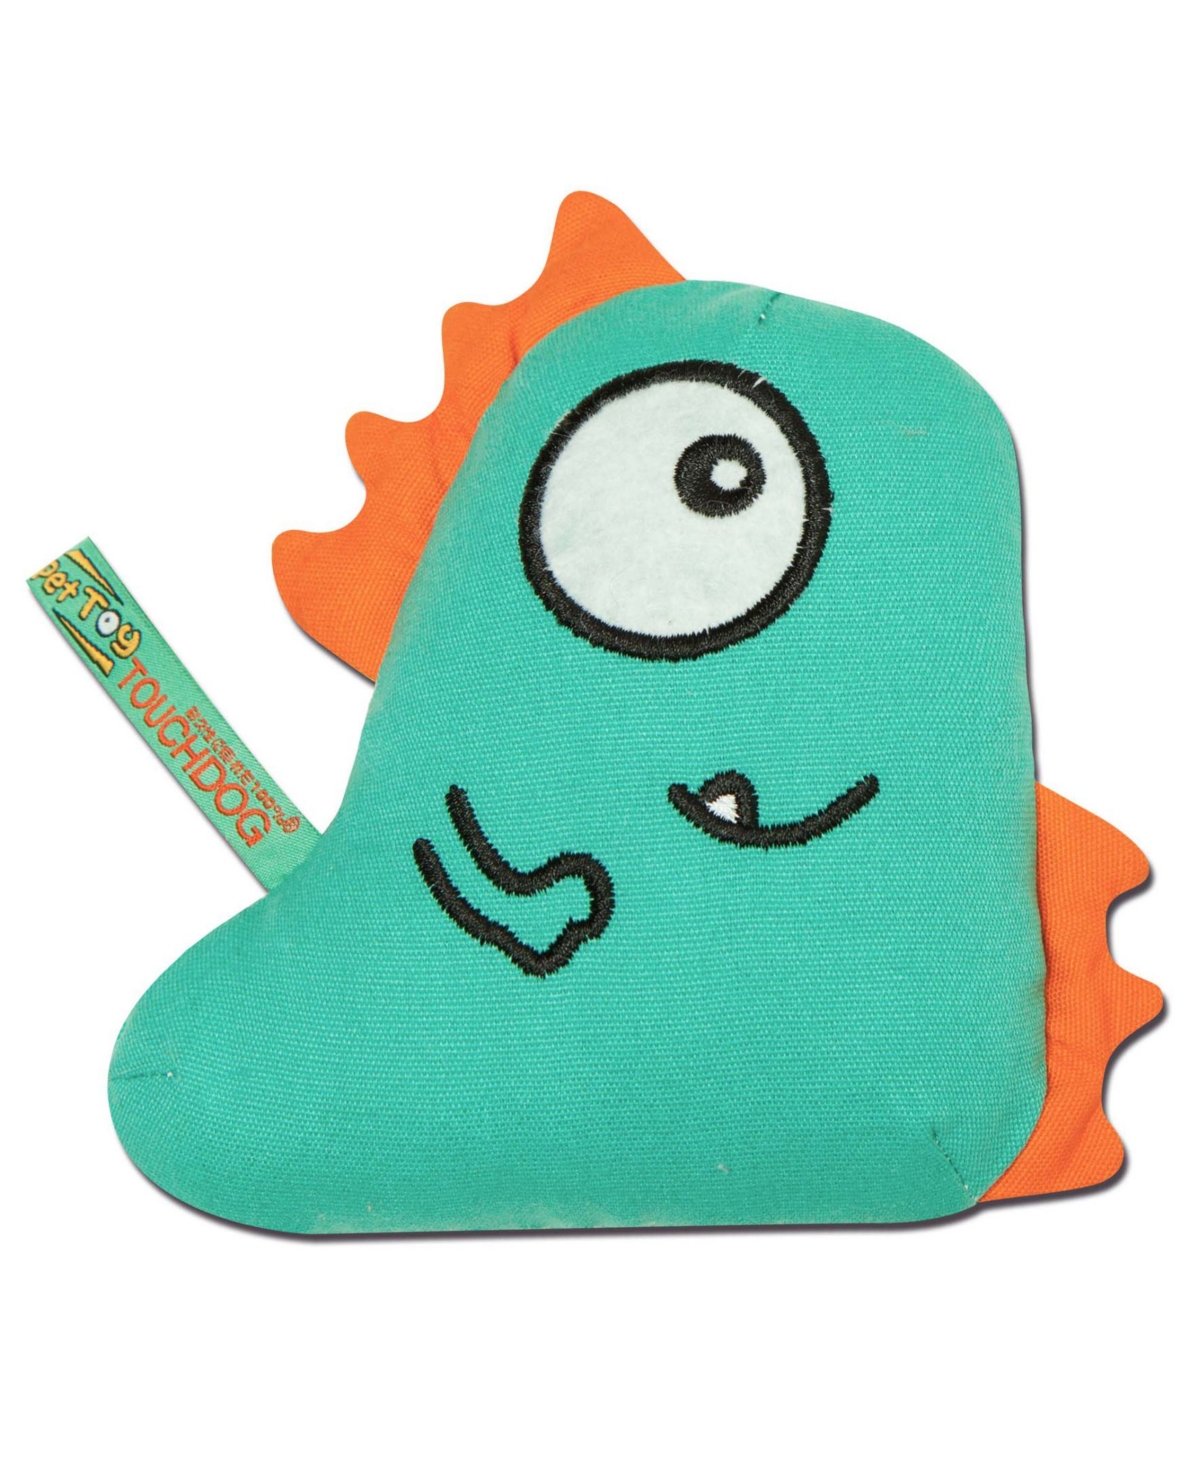 Cartoon Shoe-Faced Monster Plush Dog Toy - Green